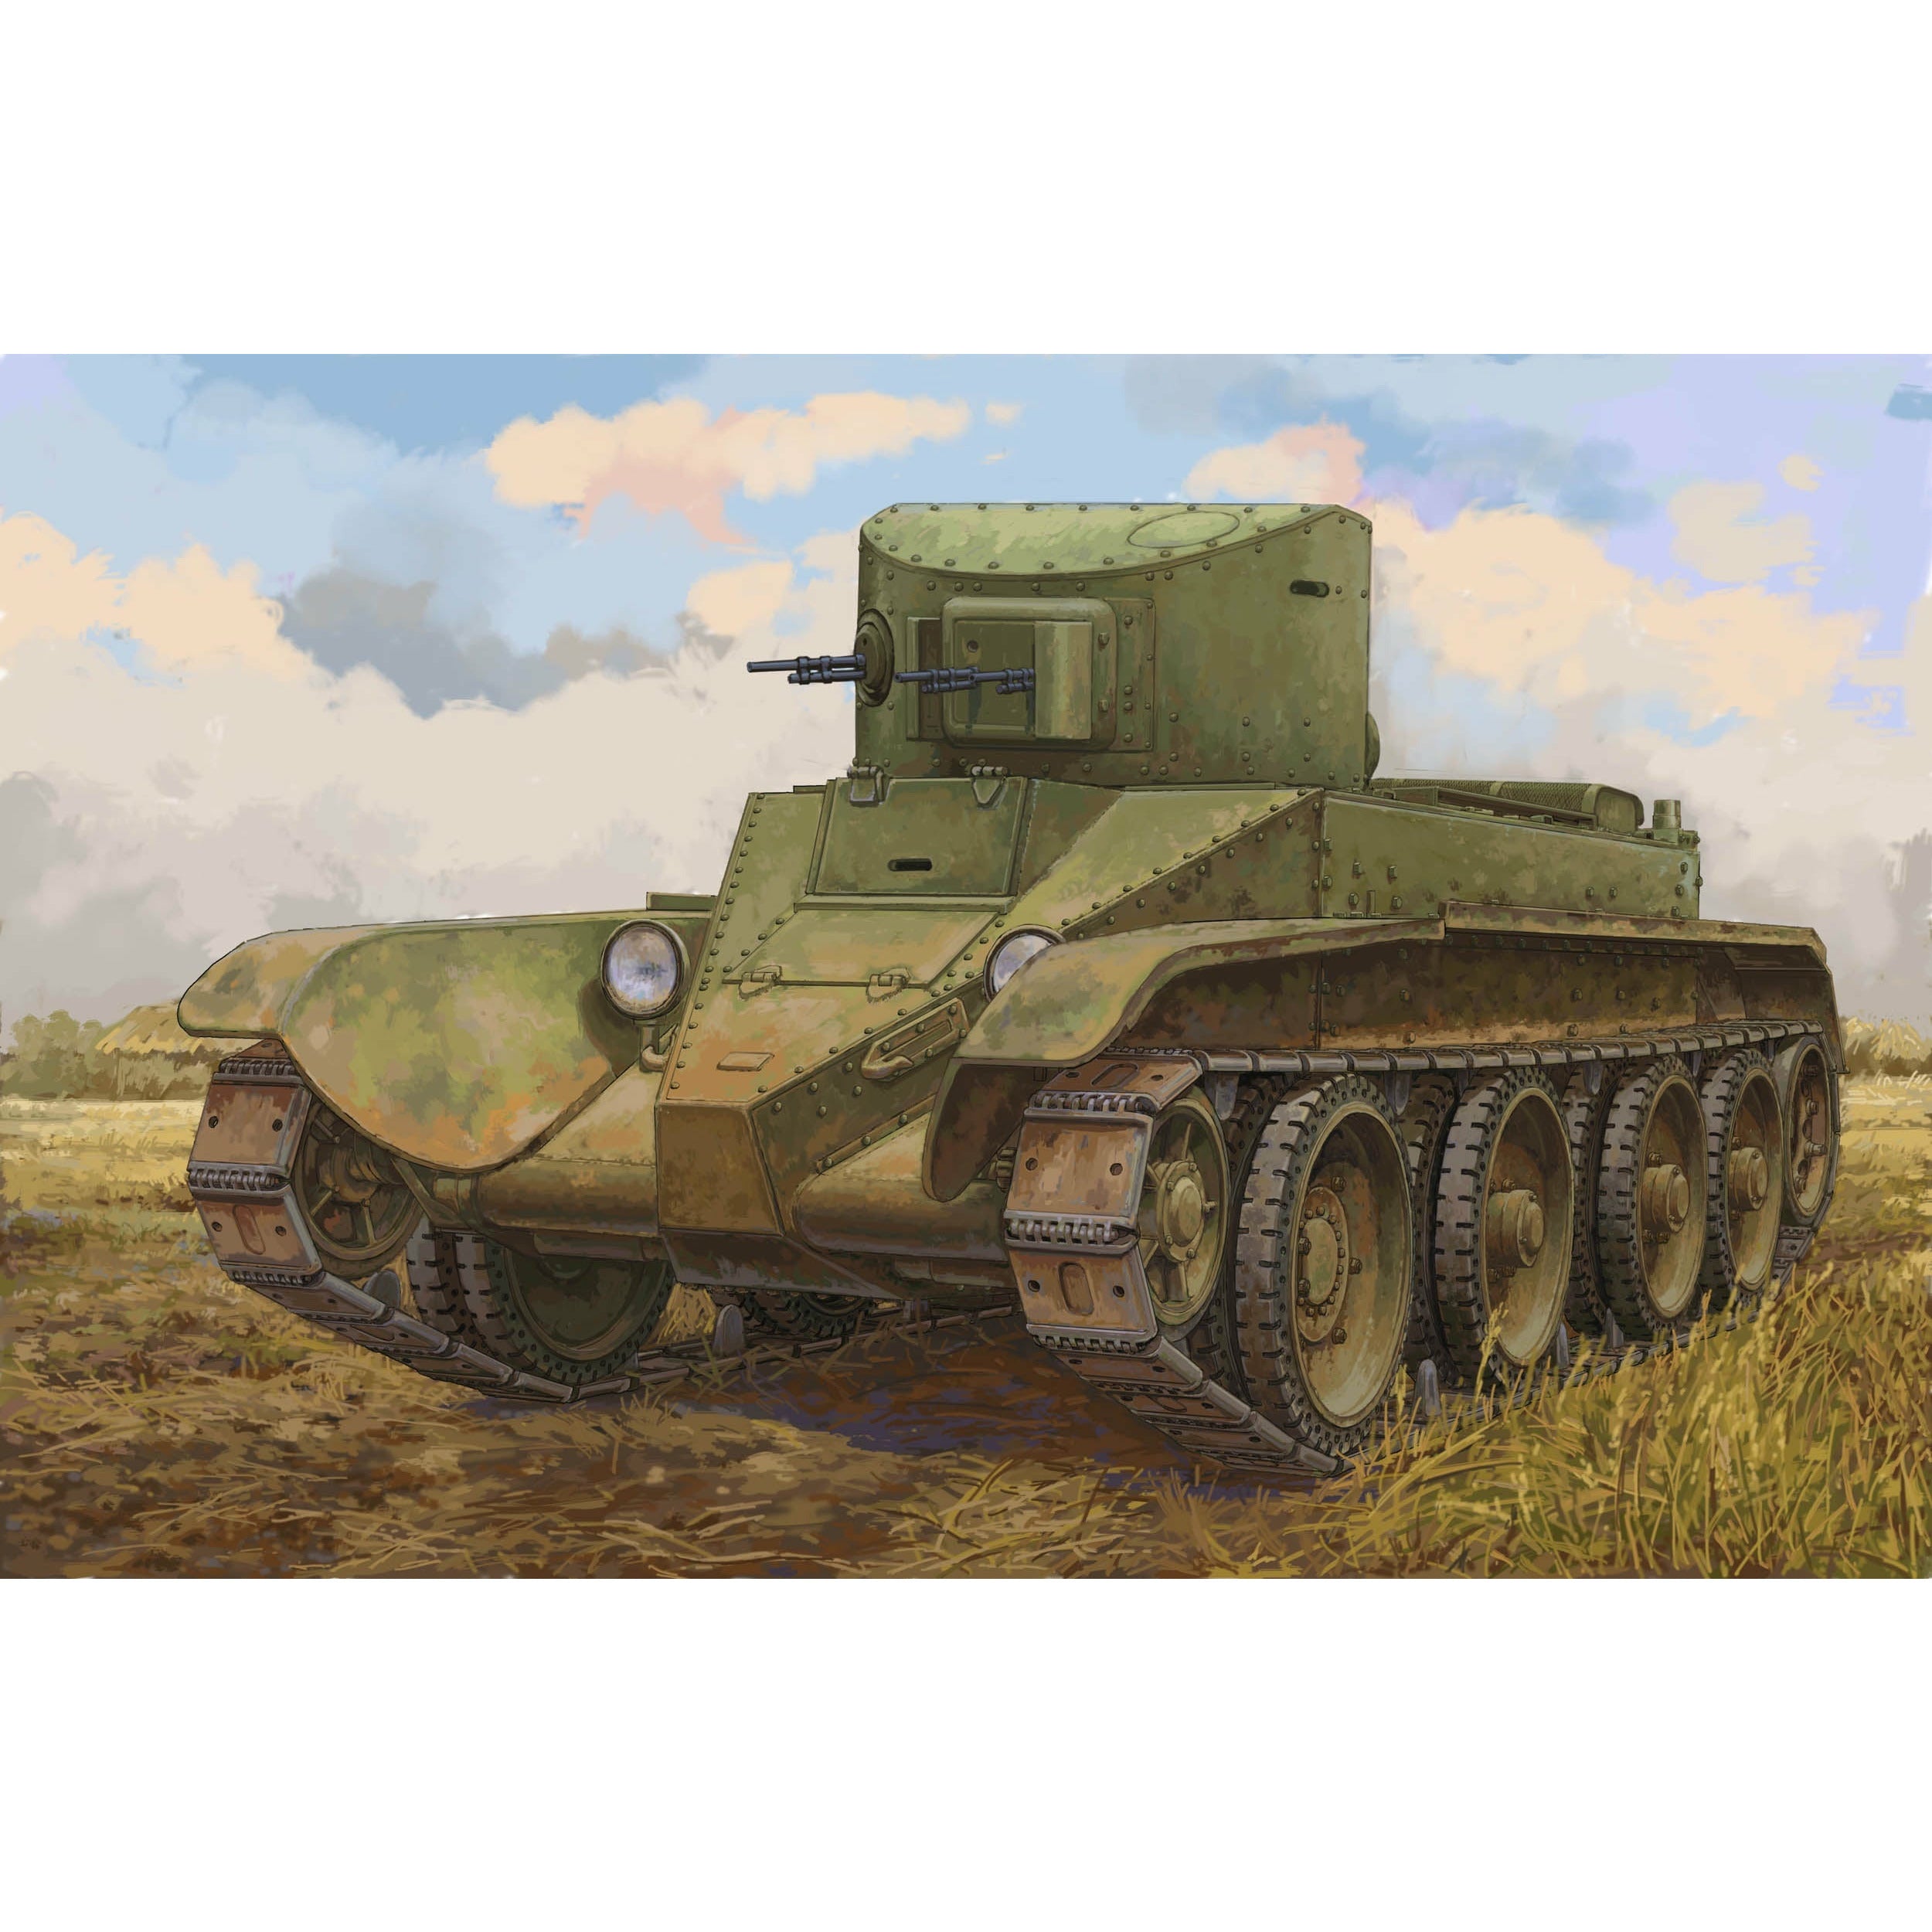 Soviet BT-2 Tank (Late) 1/35 #84516 by Hobby Boss